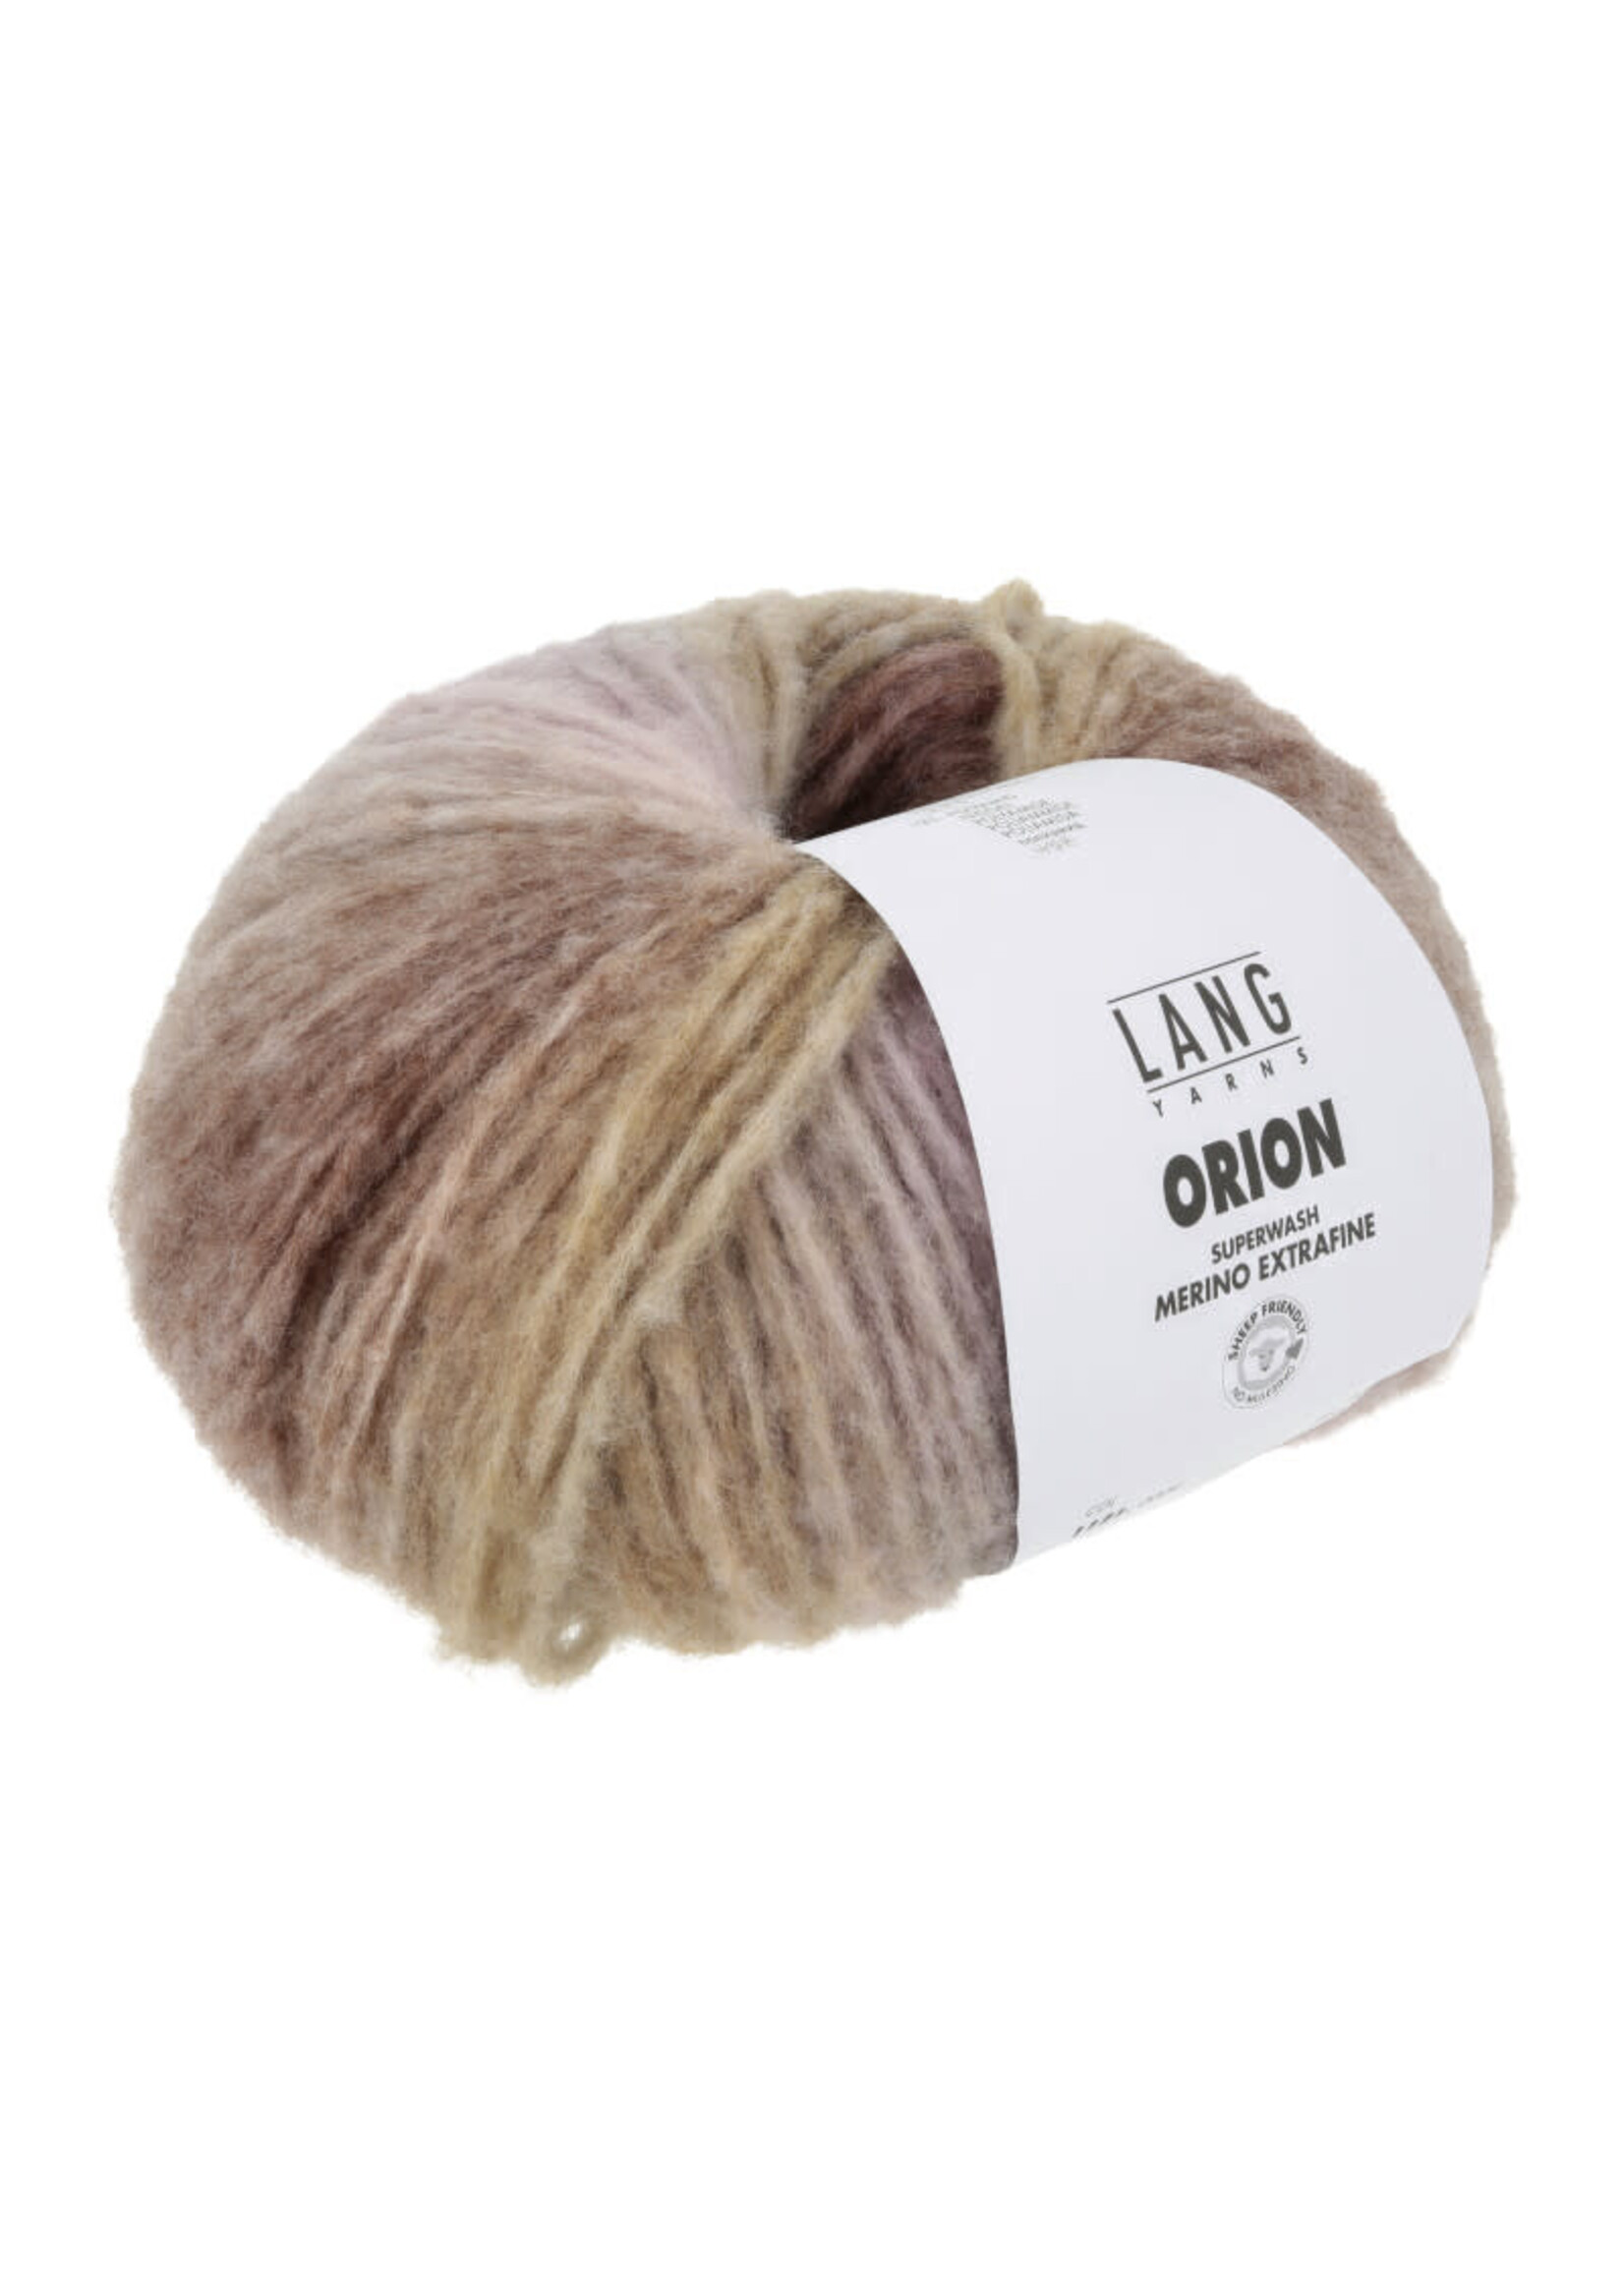 LangYarns Orion - 0004 olive/lilac/brown